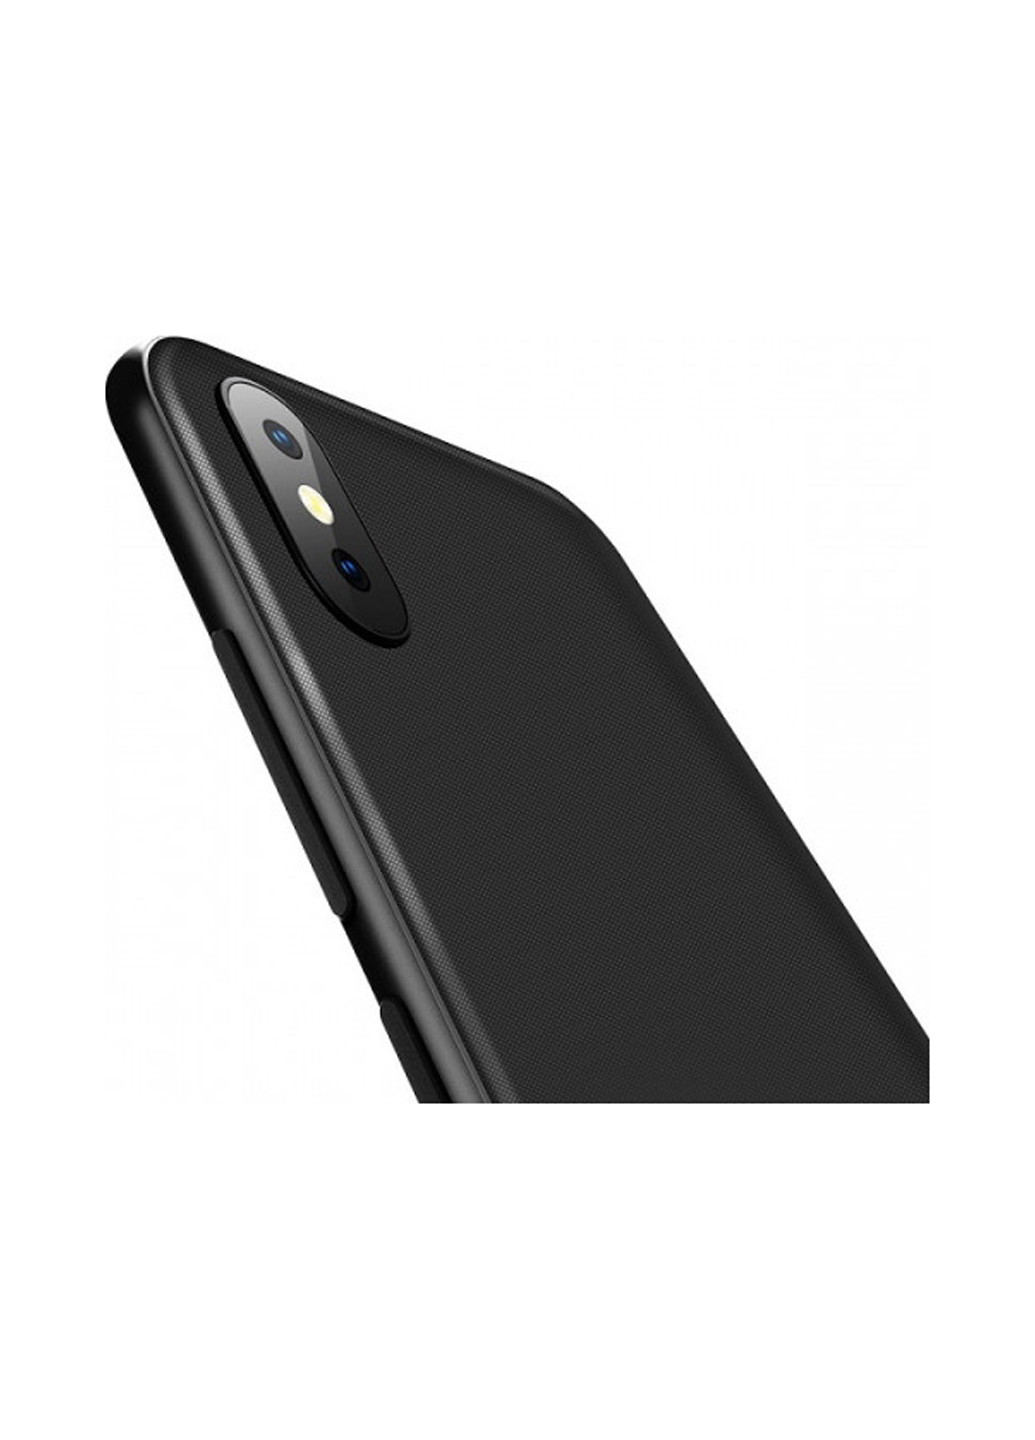 Смартфон Blackview A30 2/16GB Black чёрный